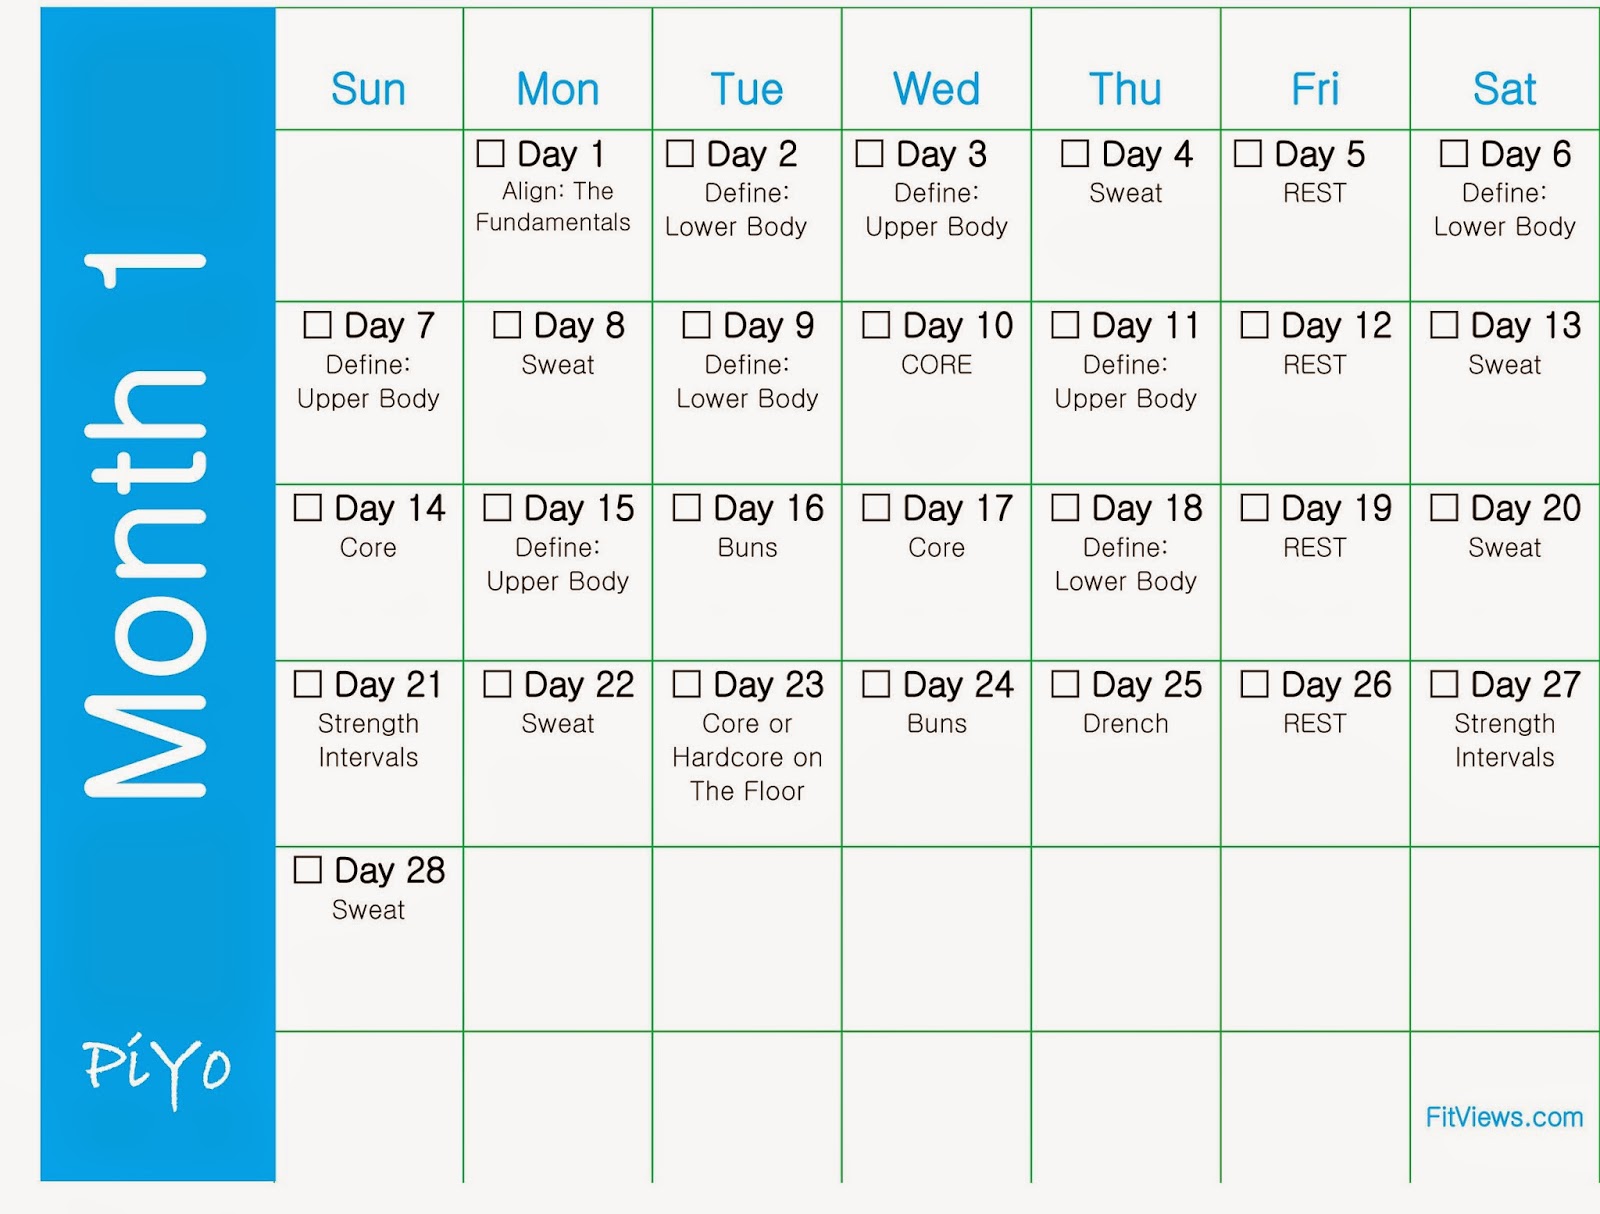 Getting Started With Piyo + Free Printable Piyo Workout Calendars